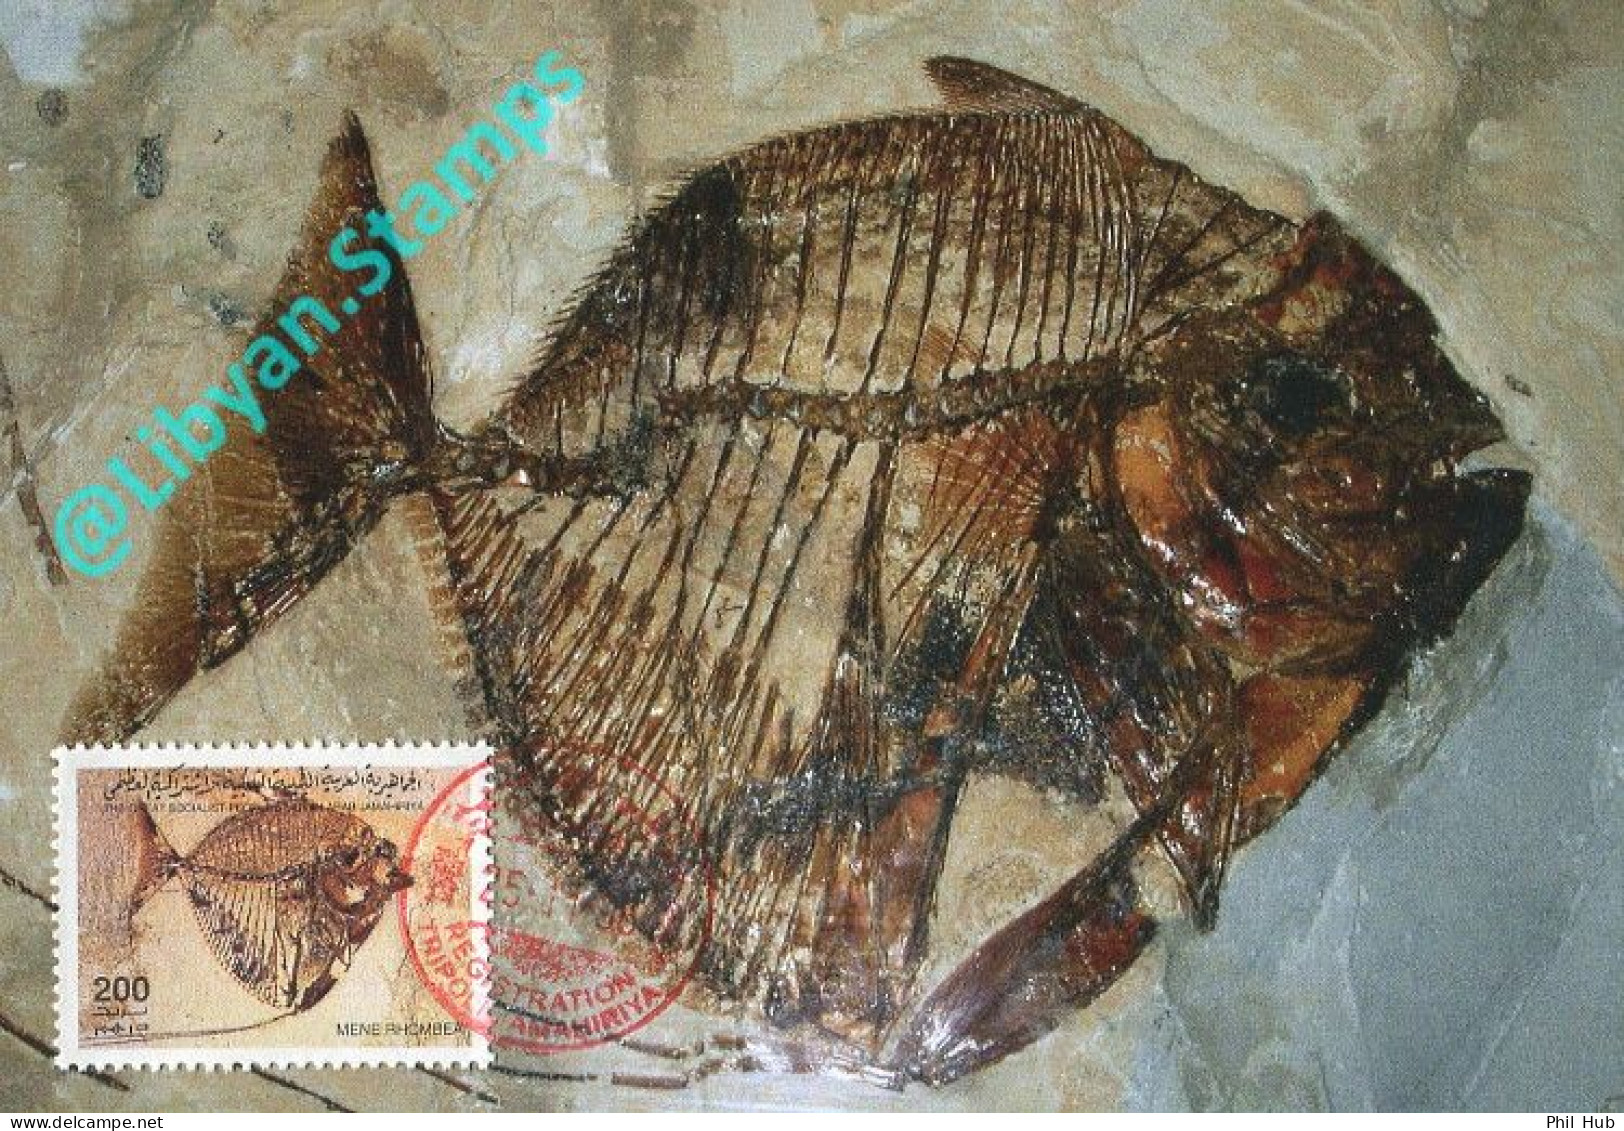 LIBYA 1996 Fossils "Mene Rhombea" Fishes (maximum-card) #1 - Fósiles